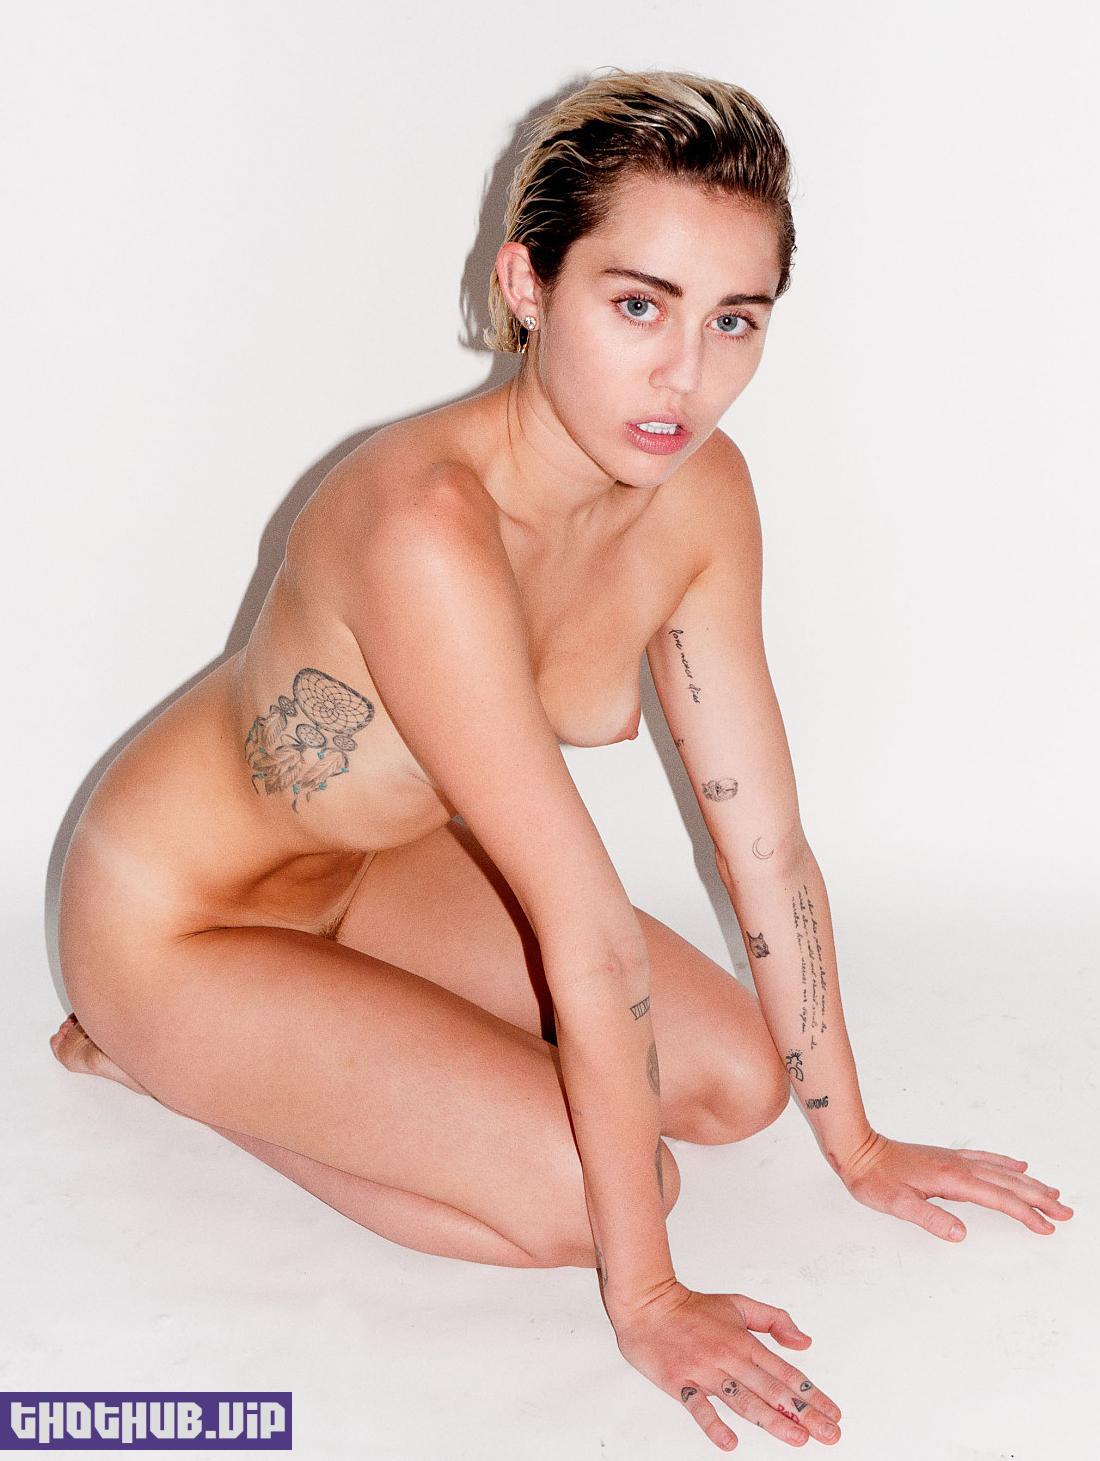 1662574415 517 Miley Cyrus Nude Magazine Photoshoot Outtakes Set Leaked